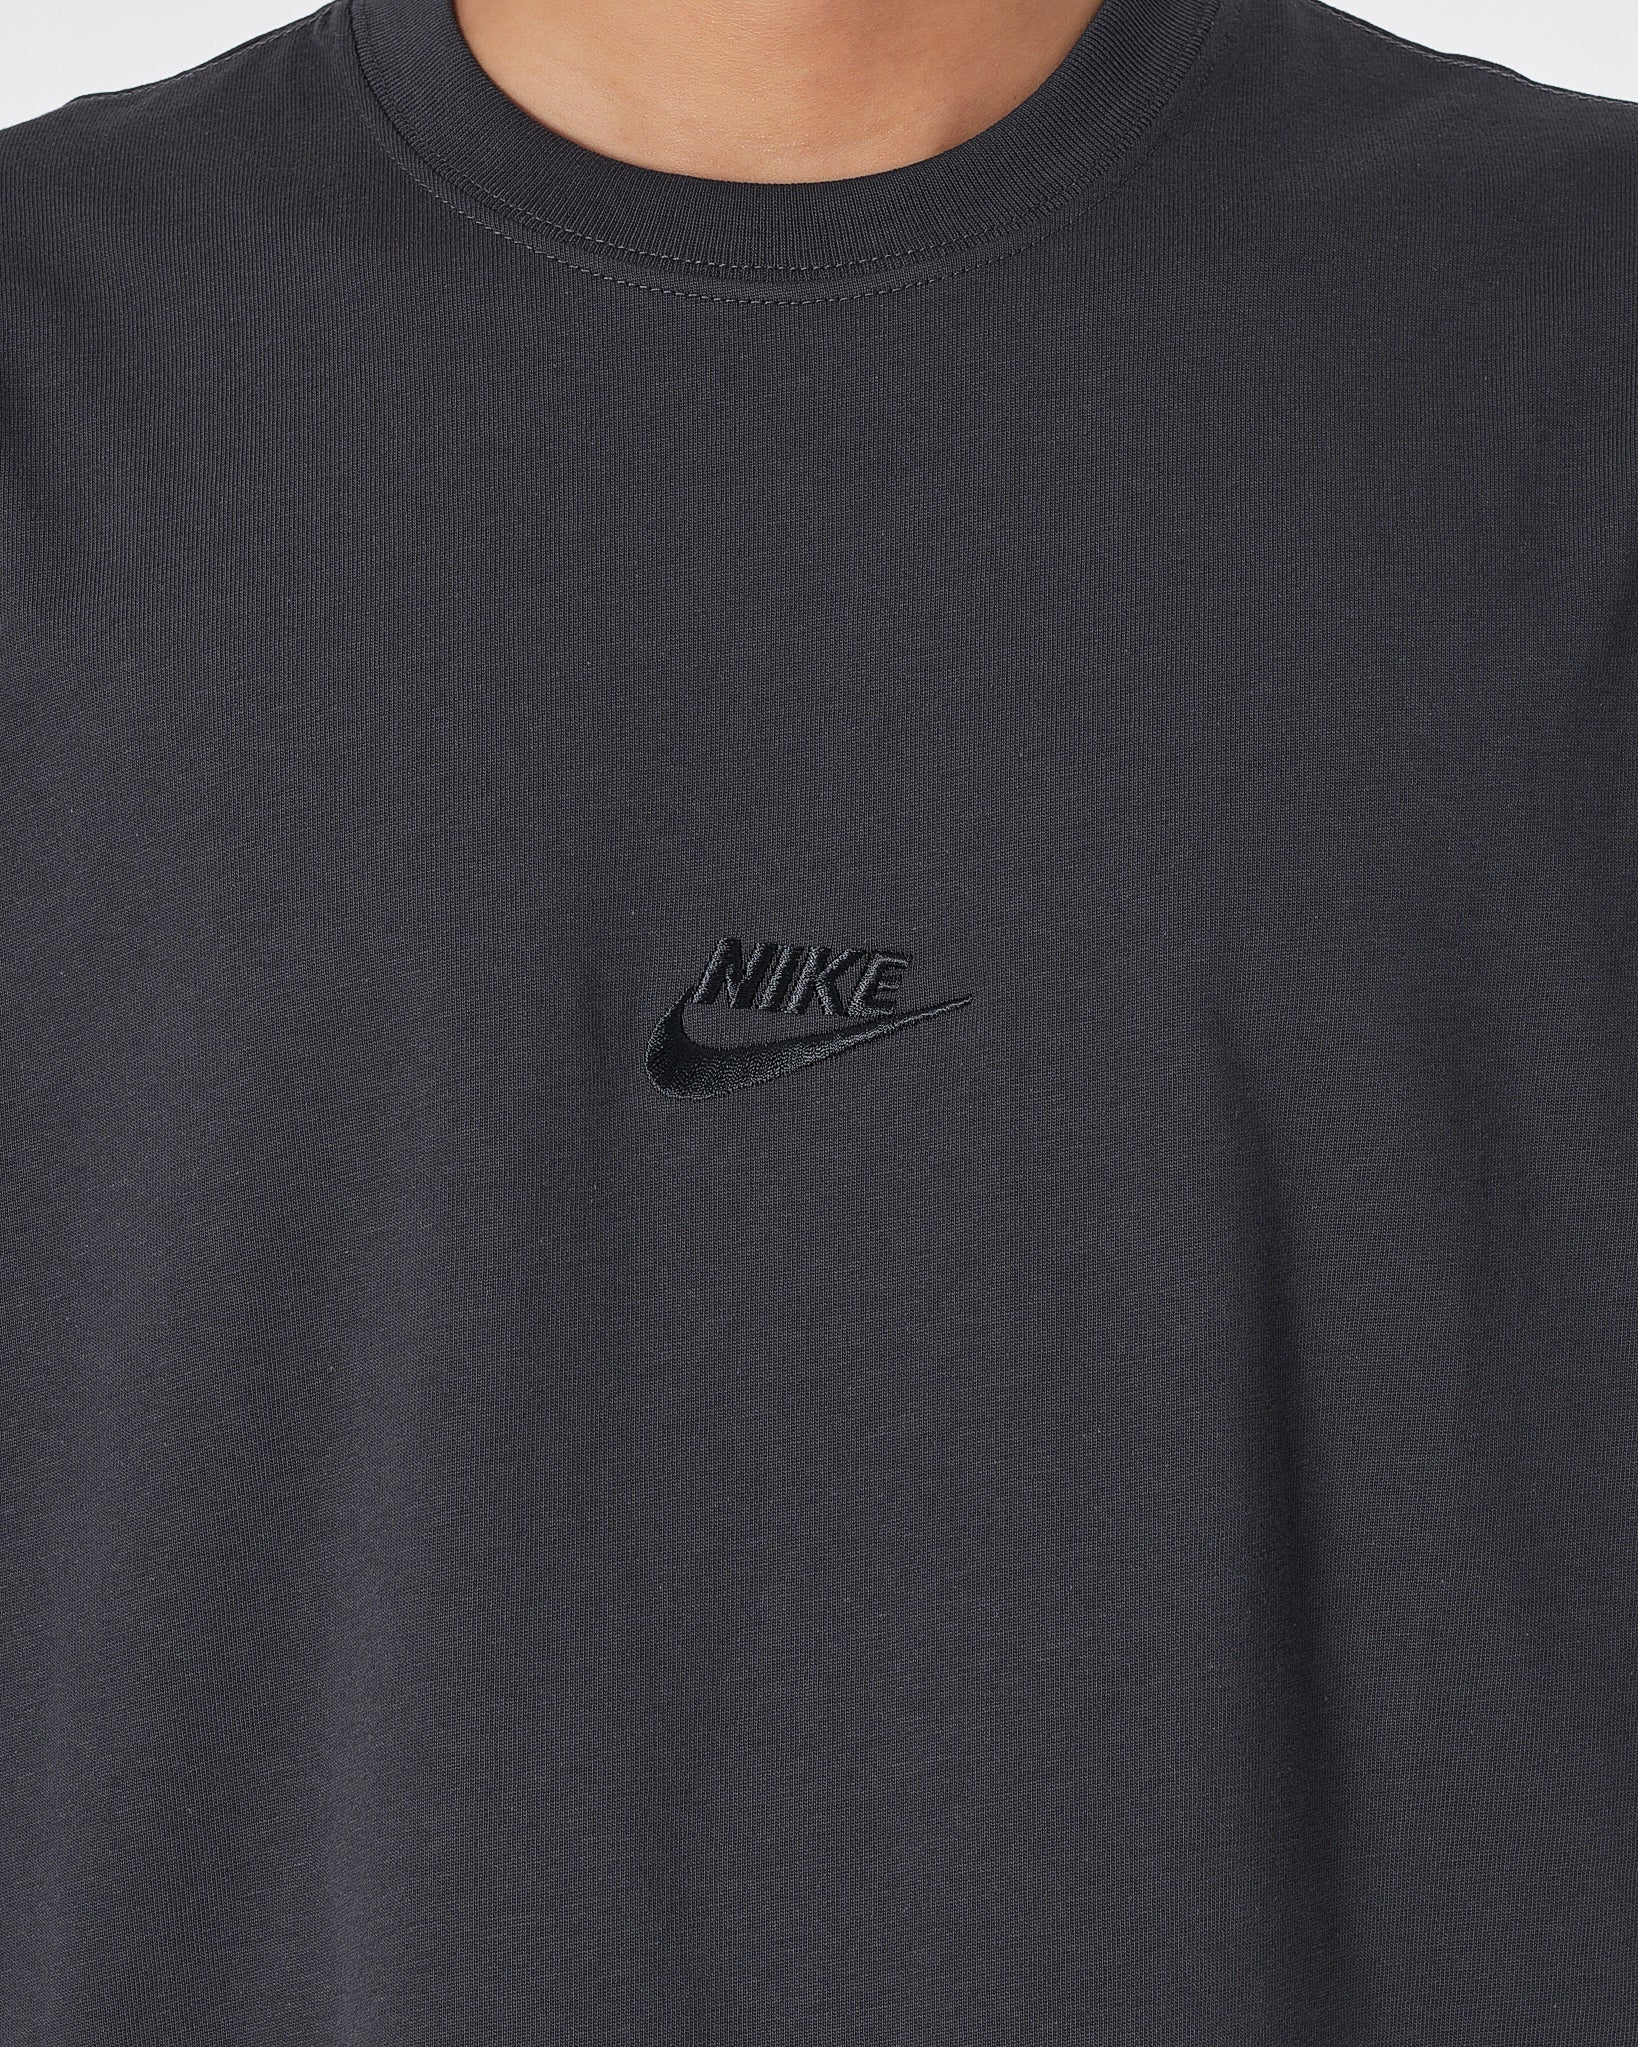 NIK Logo Embroidered Men Dark Grey T-Shirt 16.90